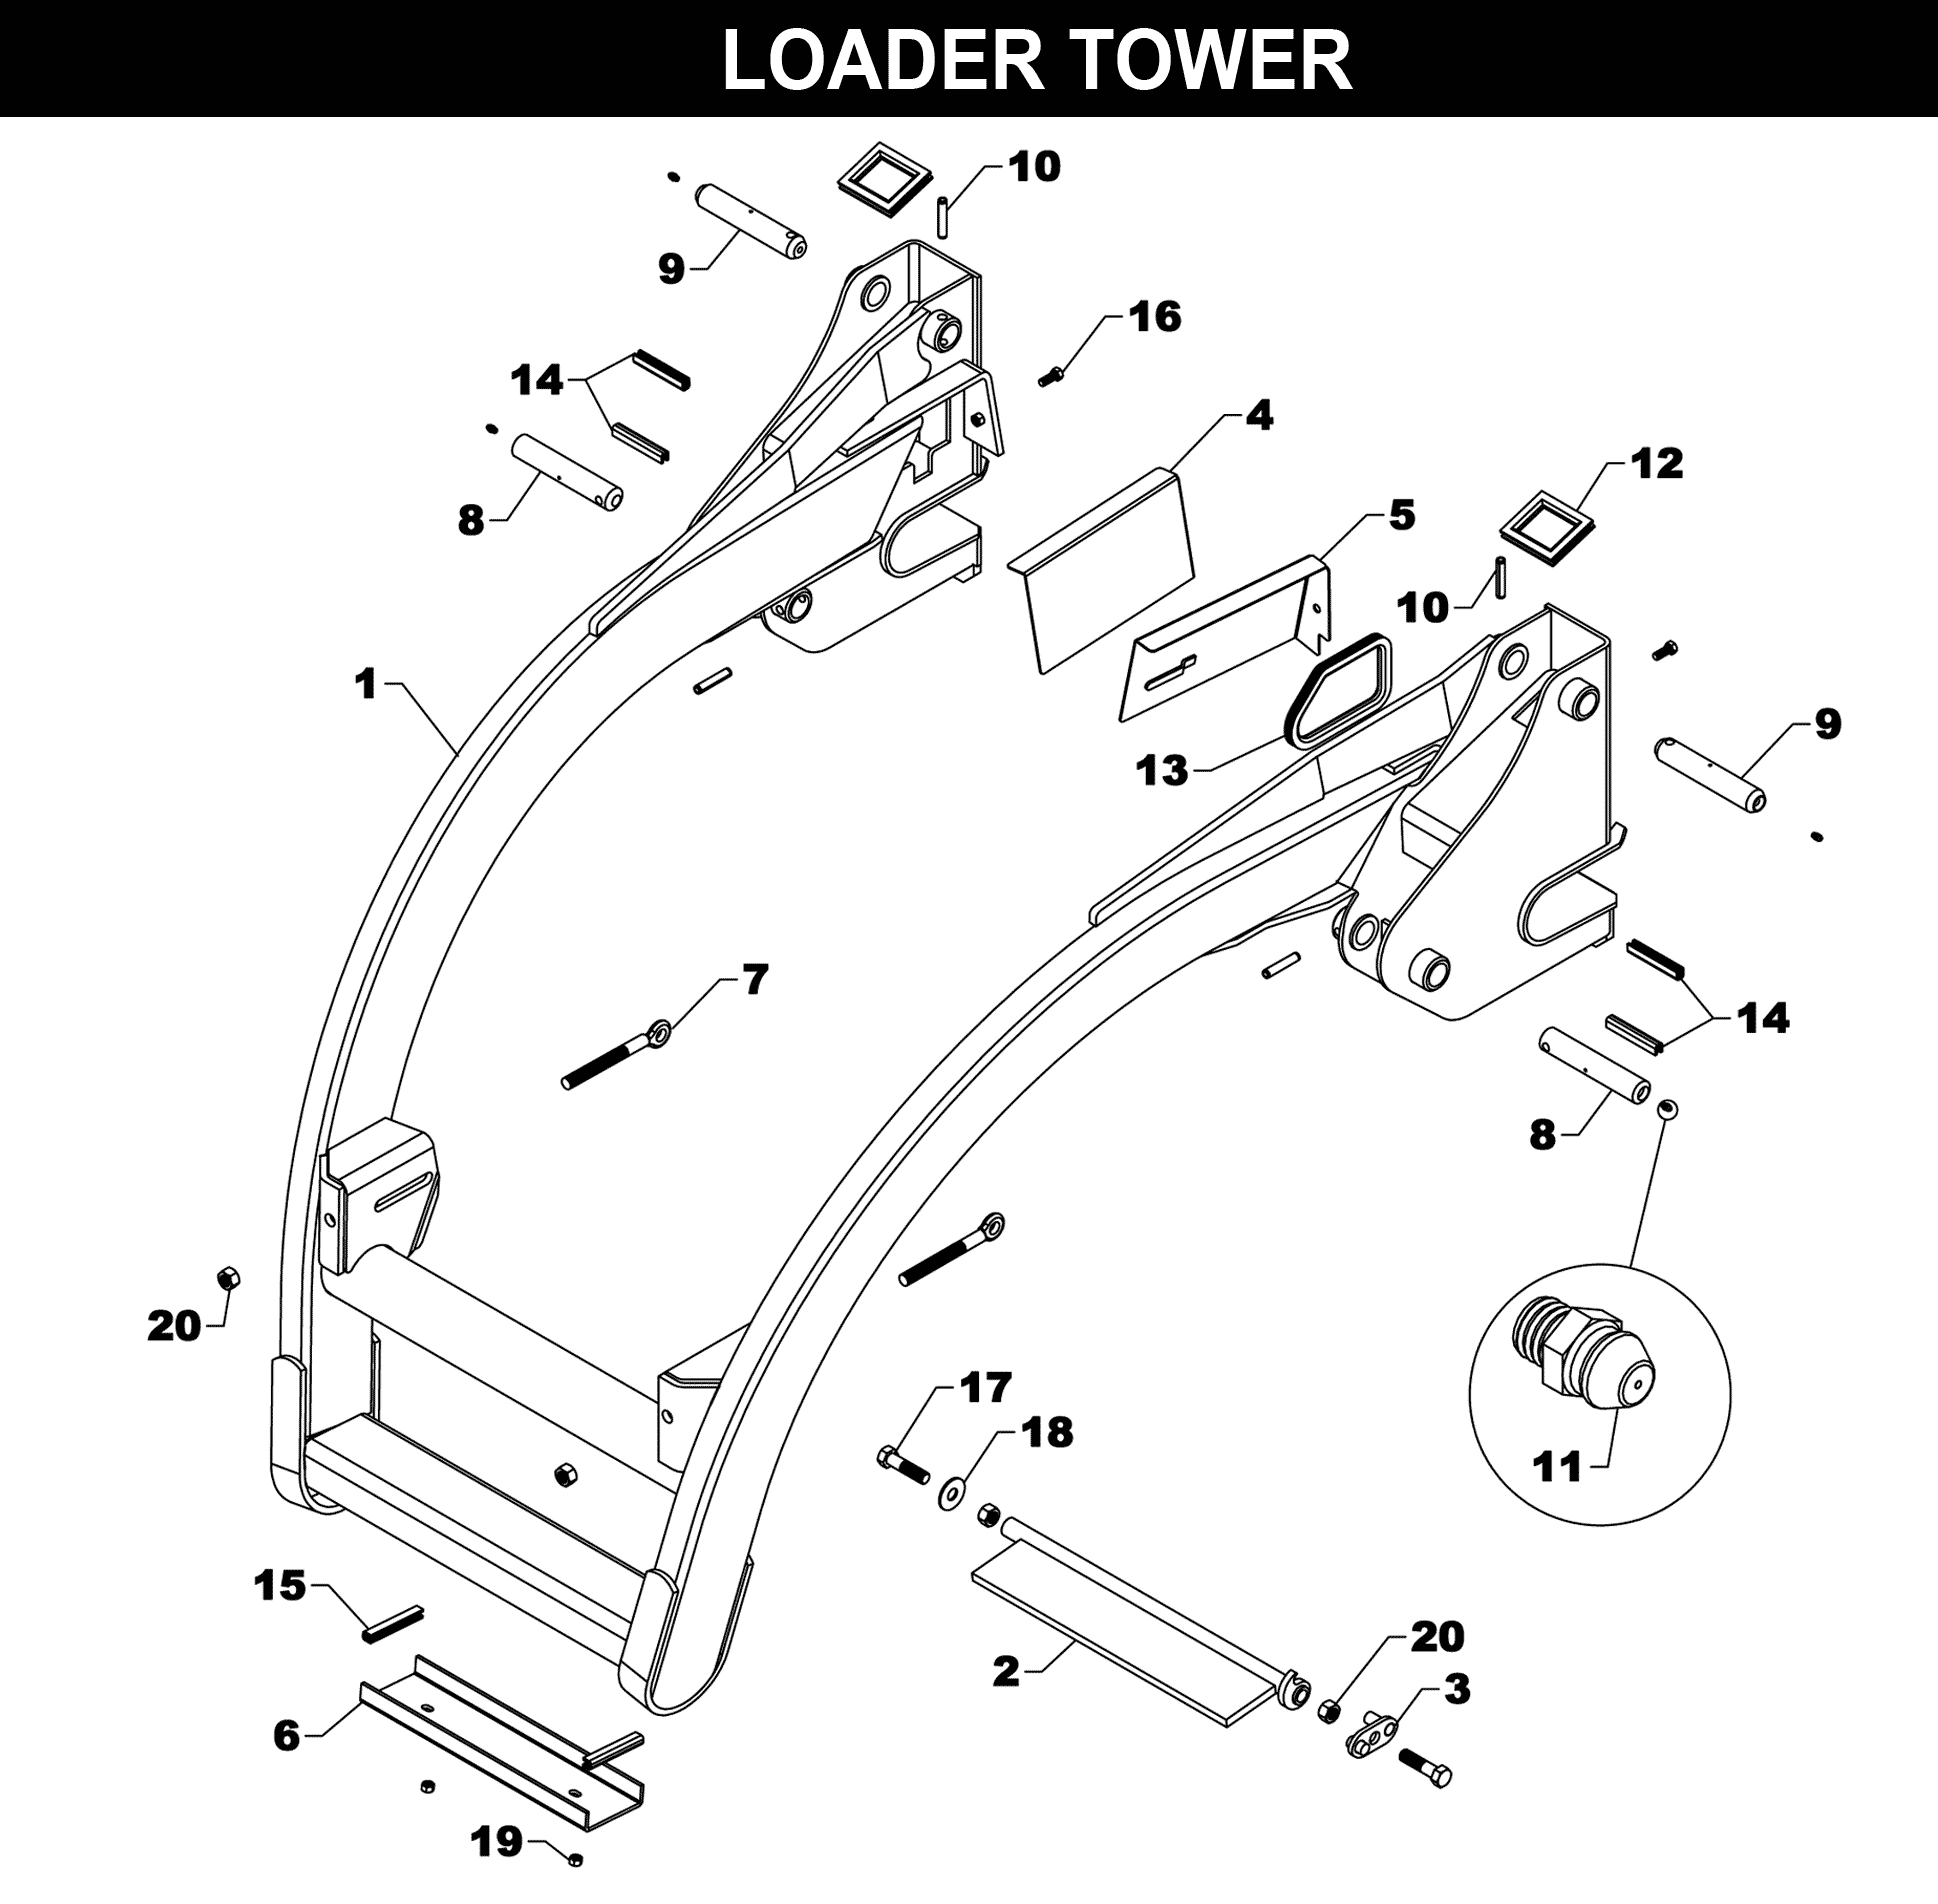 CC-330 Loader Tower